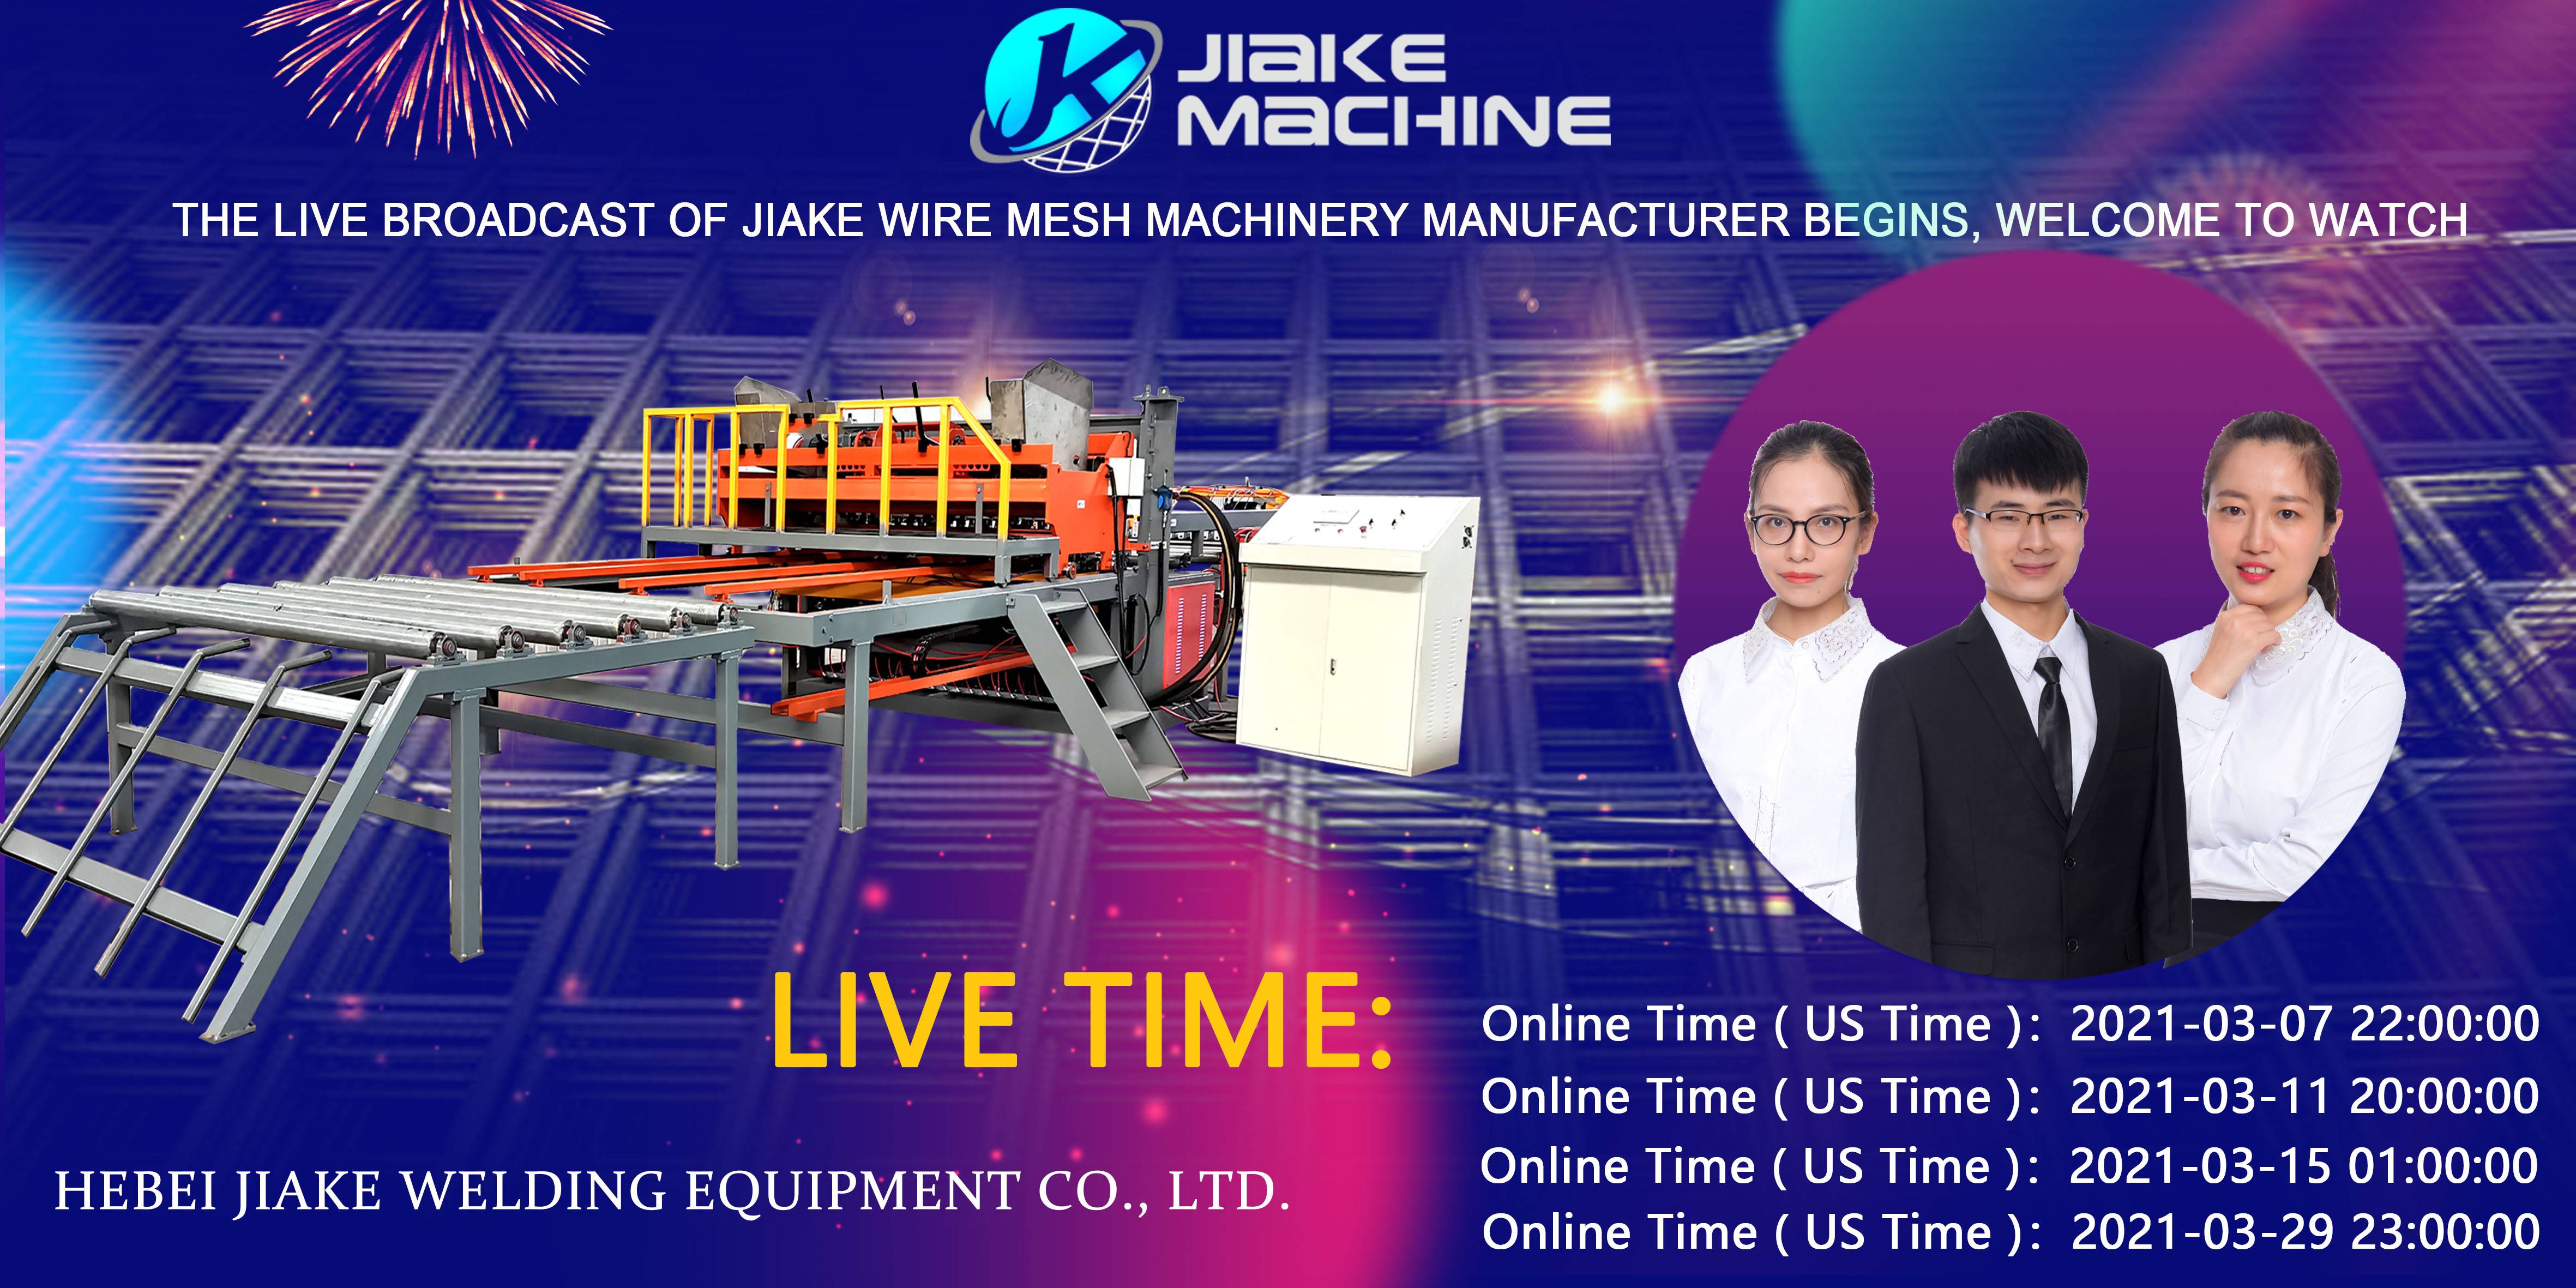 La diffusion en direct de Jiake Wire Mesh Machinery aura lieu en mars, bienvenue à regarder